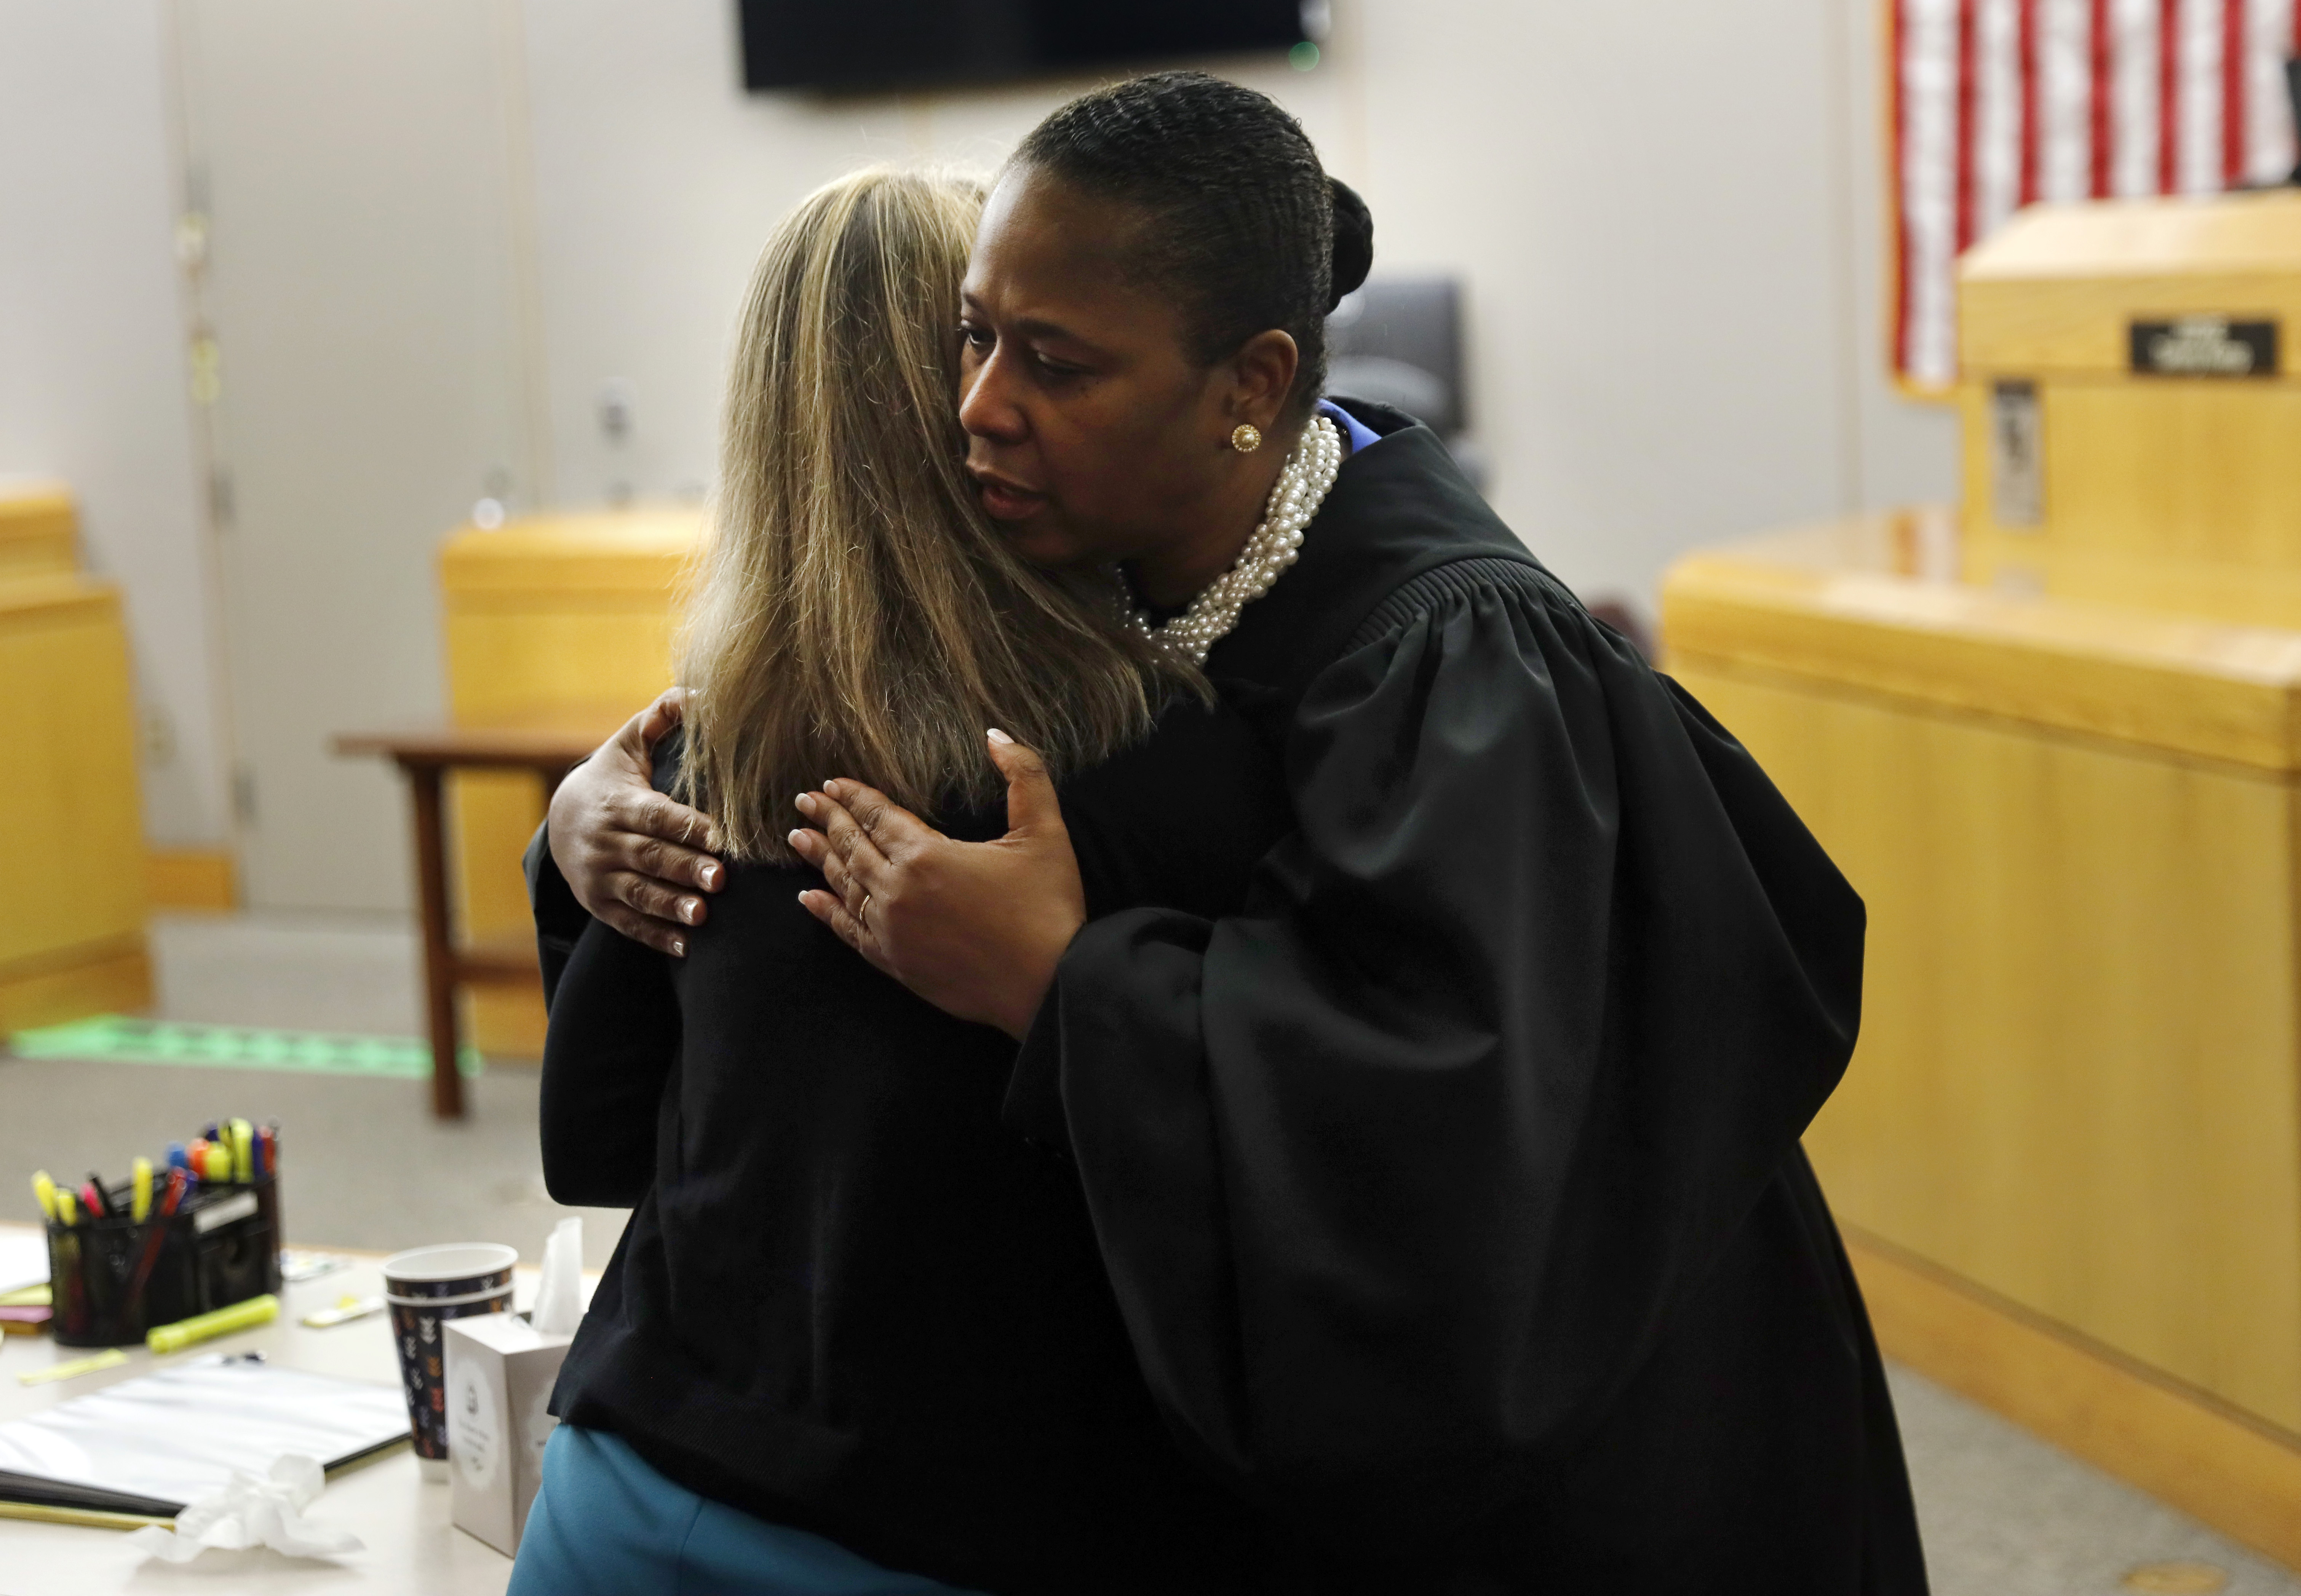  Judge Tammy Kemp gives former Dallas Police Officer Amber Guyger a hug